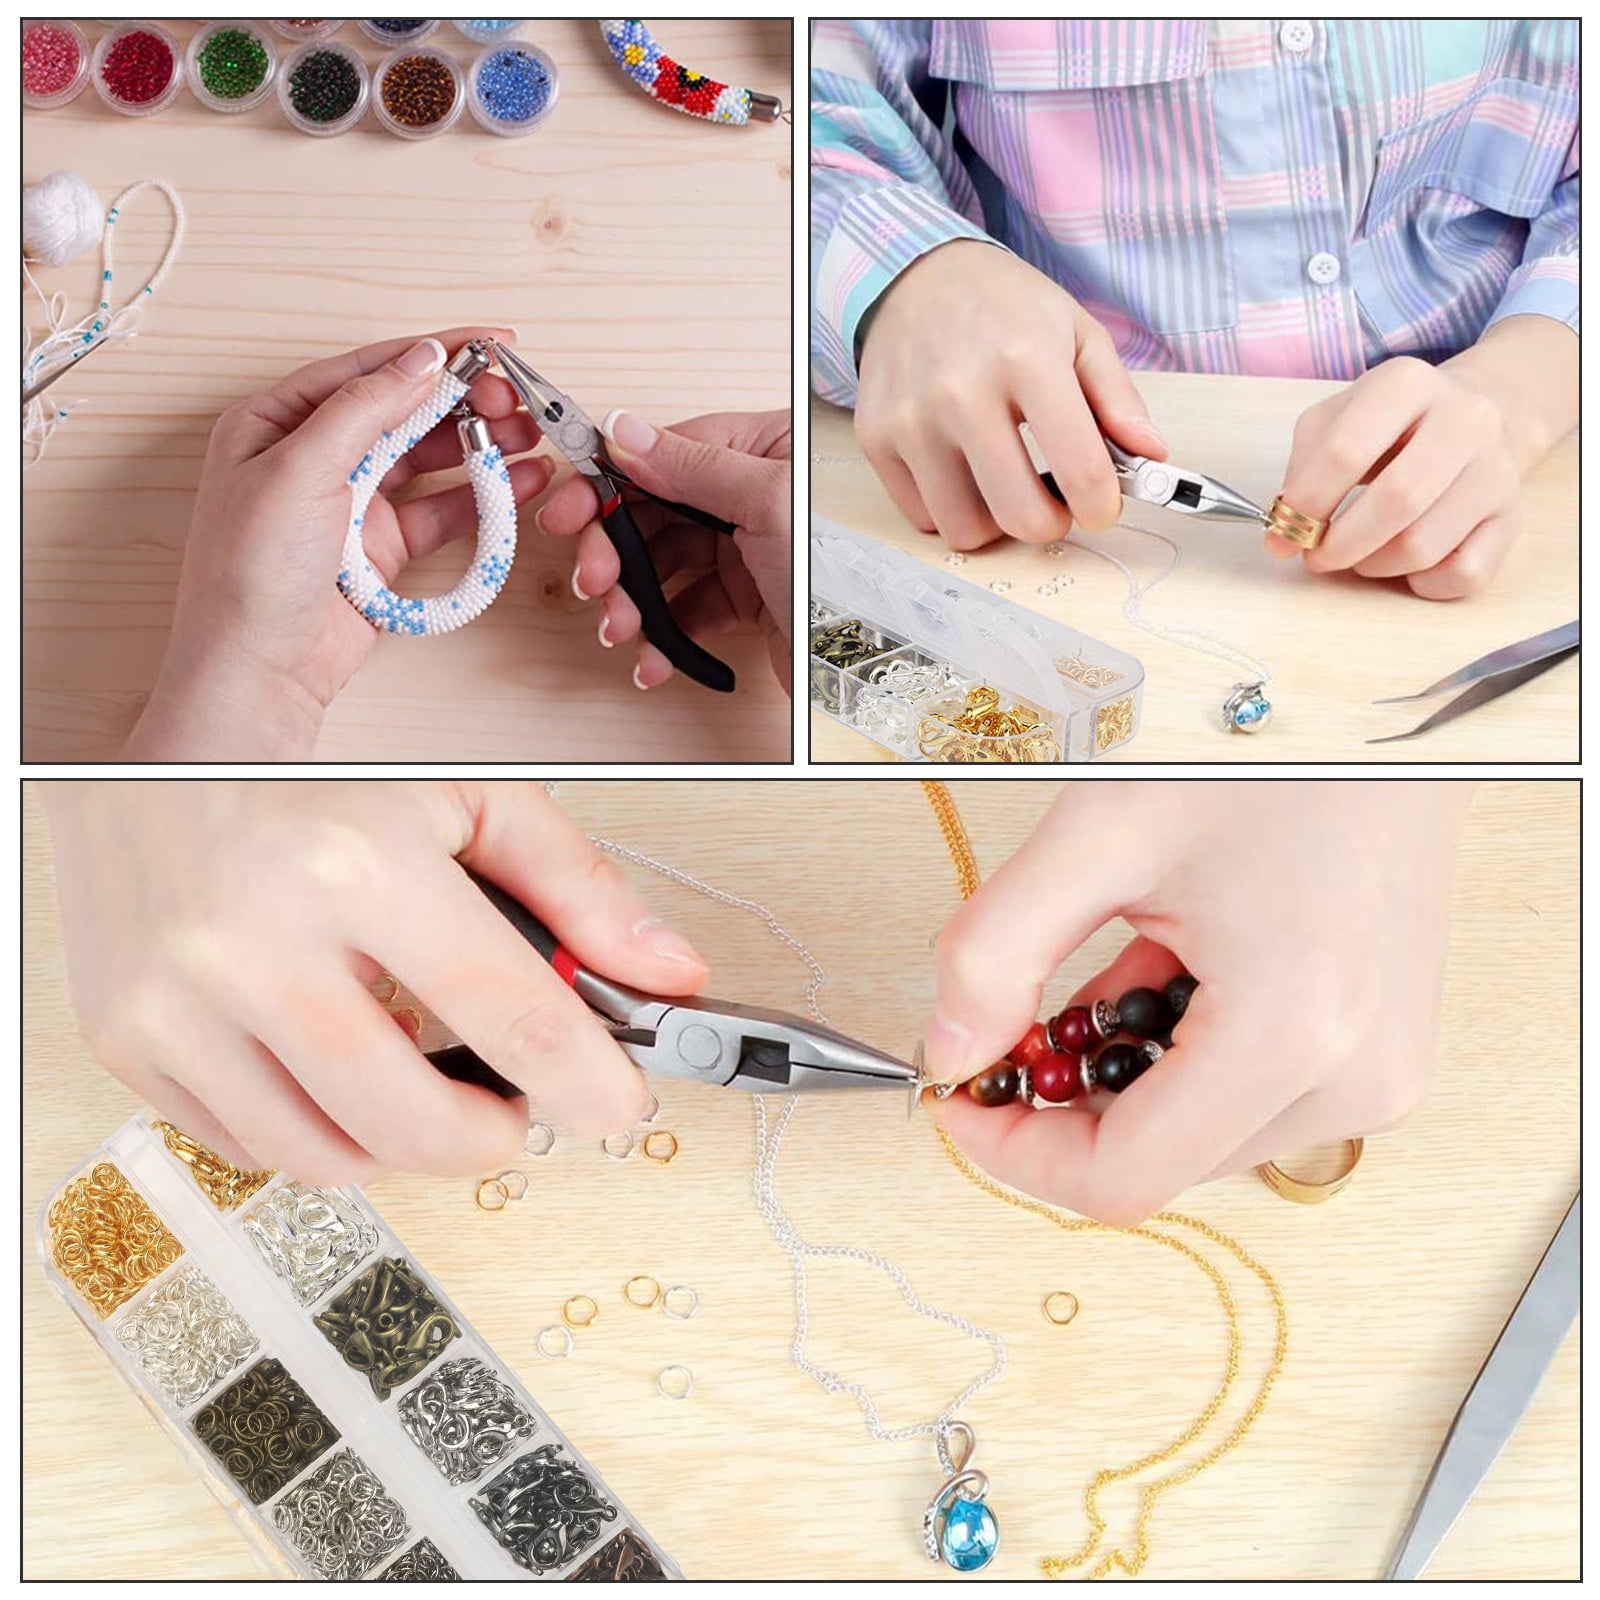 974pcs Jewelry Making Supplies, EEEkit Jewelry Repair Kit, Open